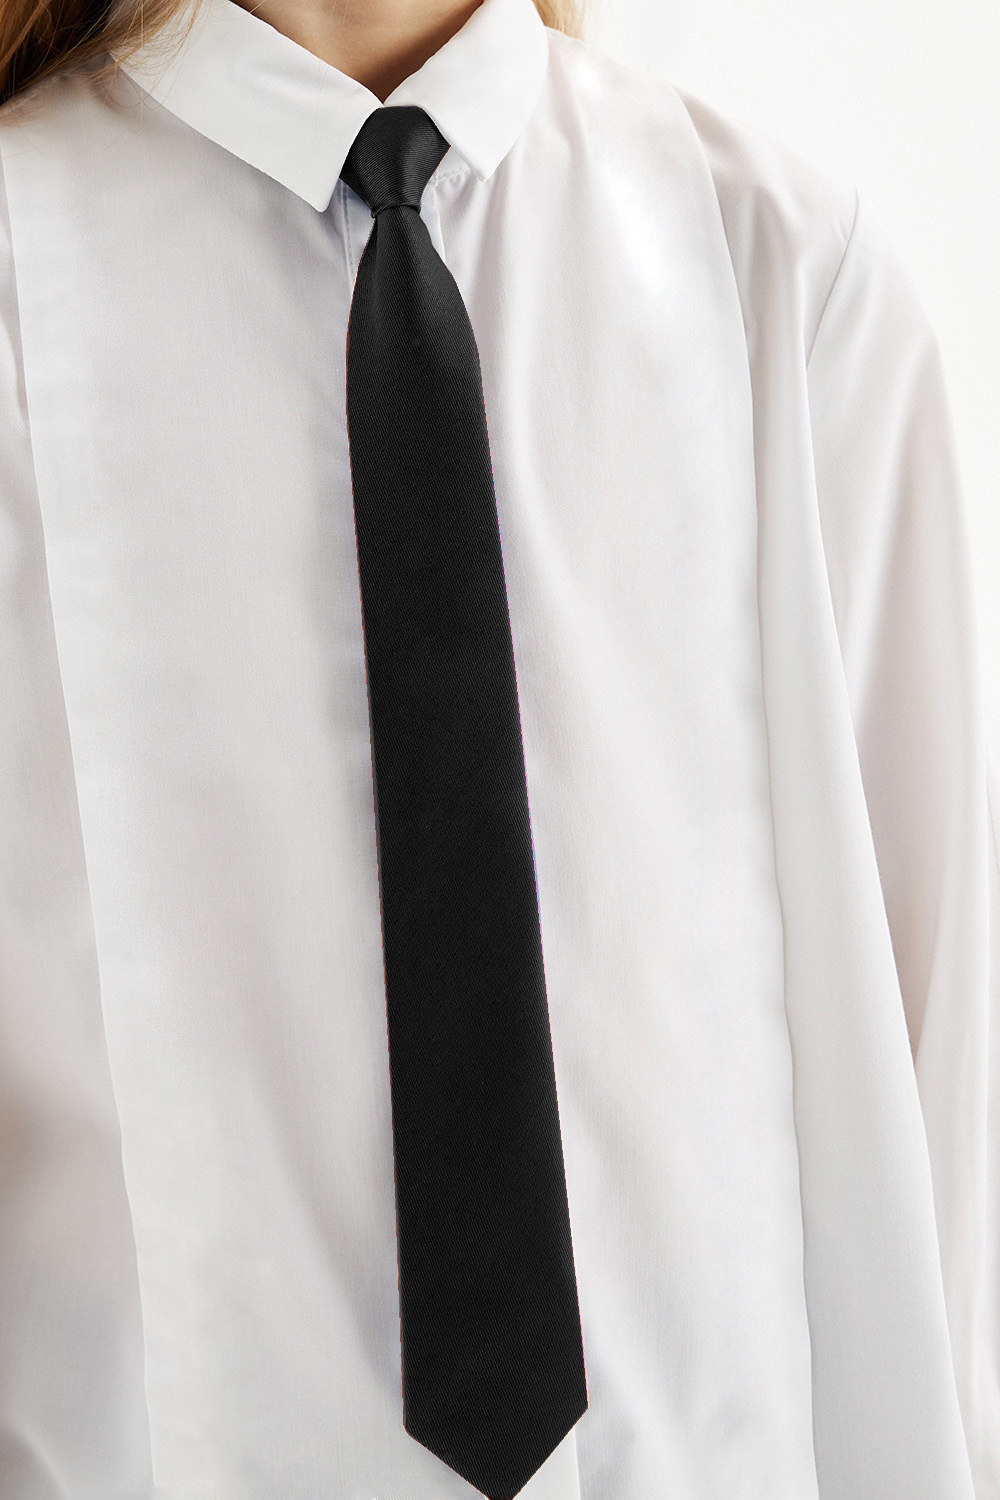 Классический галстук из атласной ткани (SSFSB-229-17904-100) Silver spoon